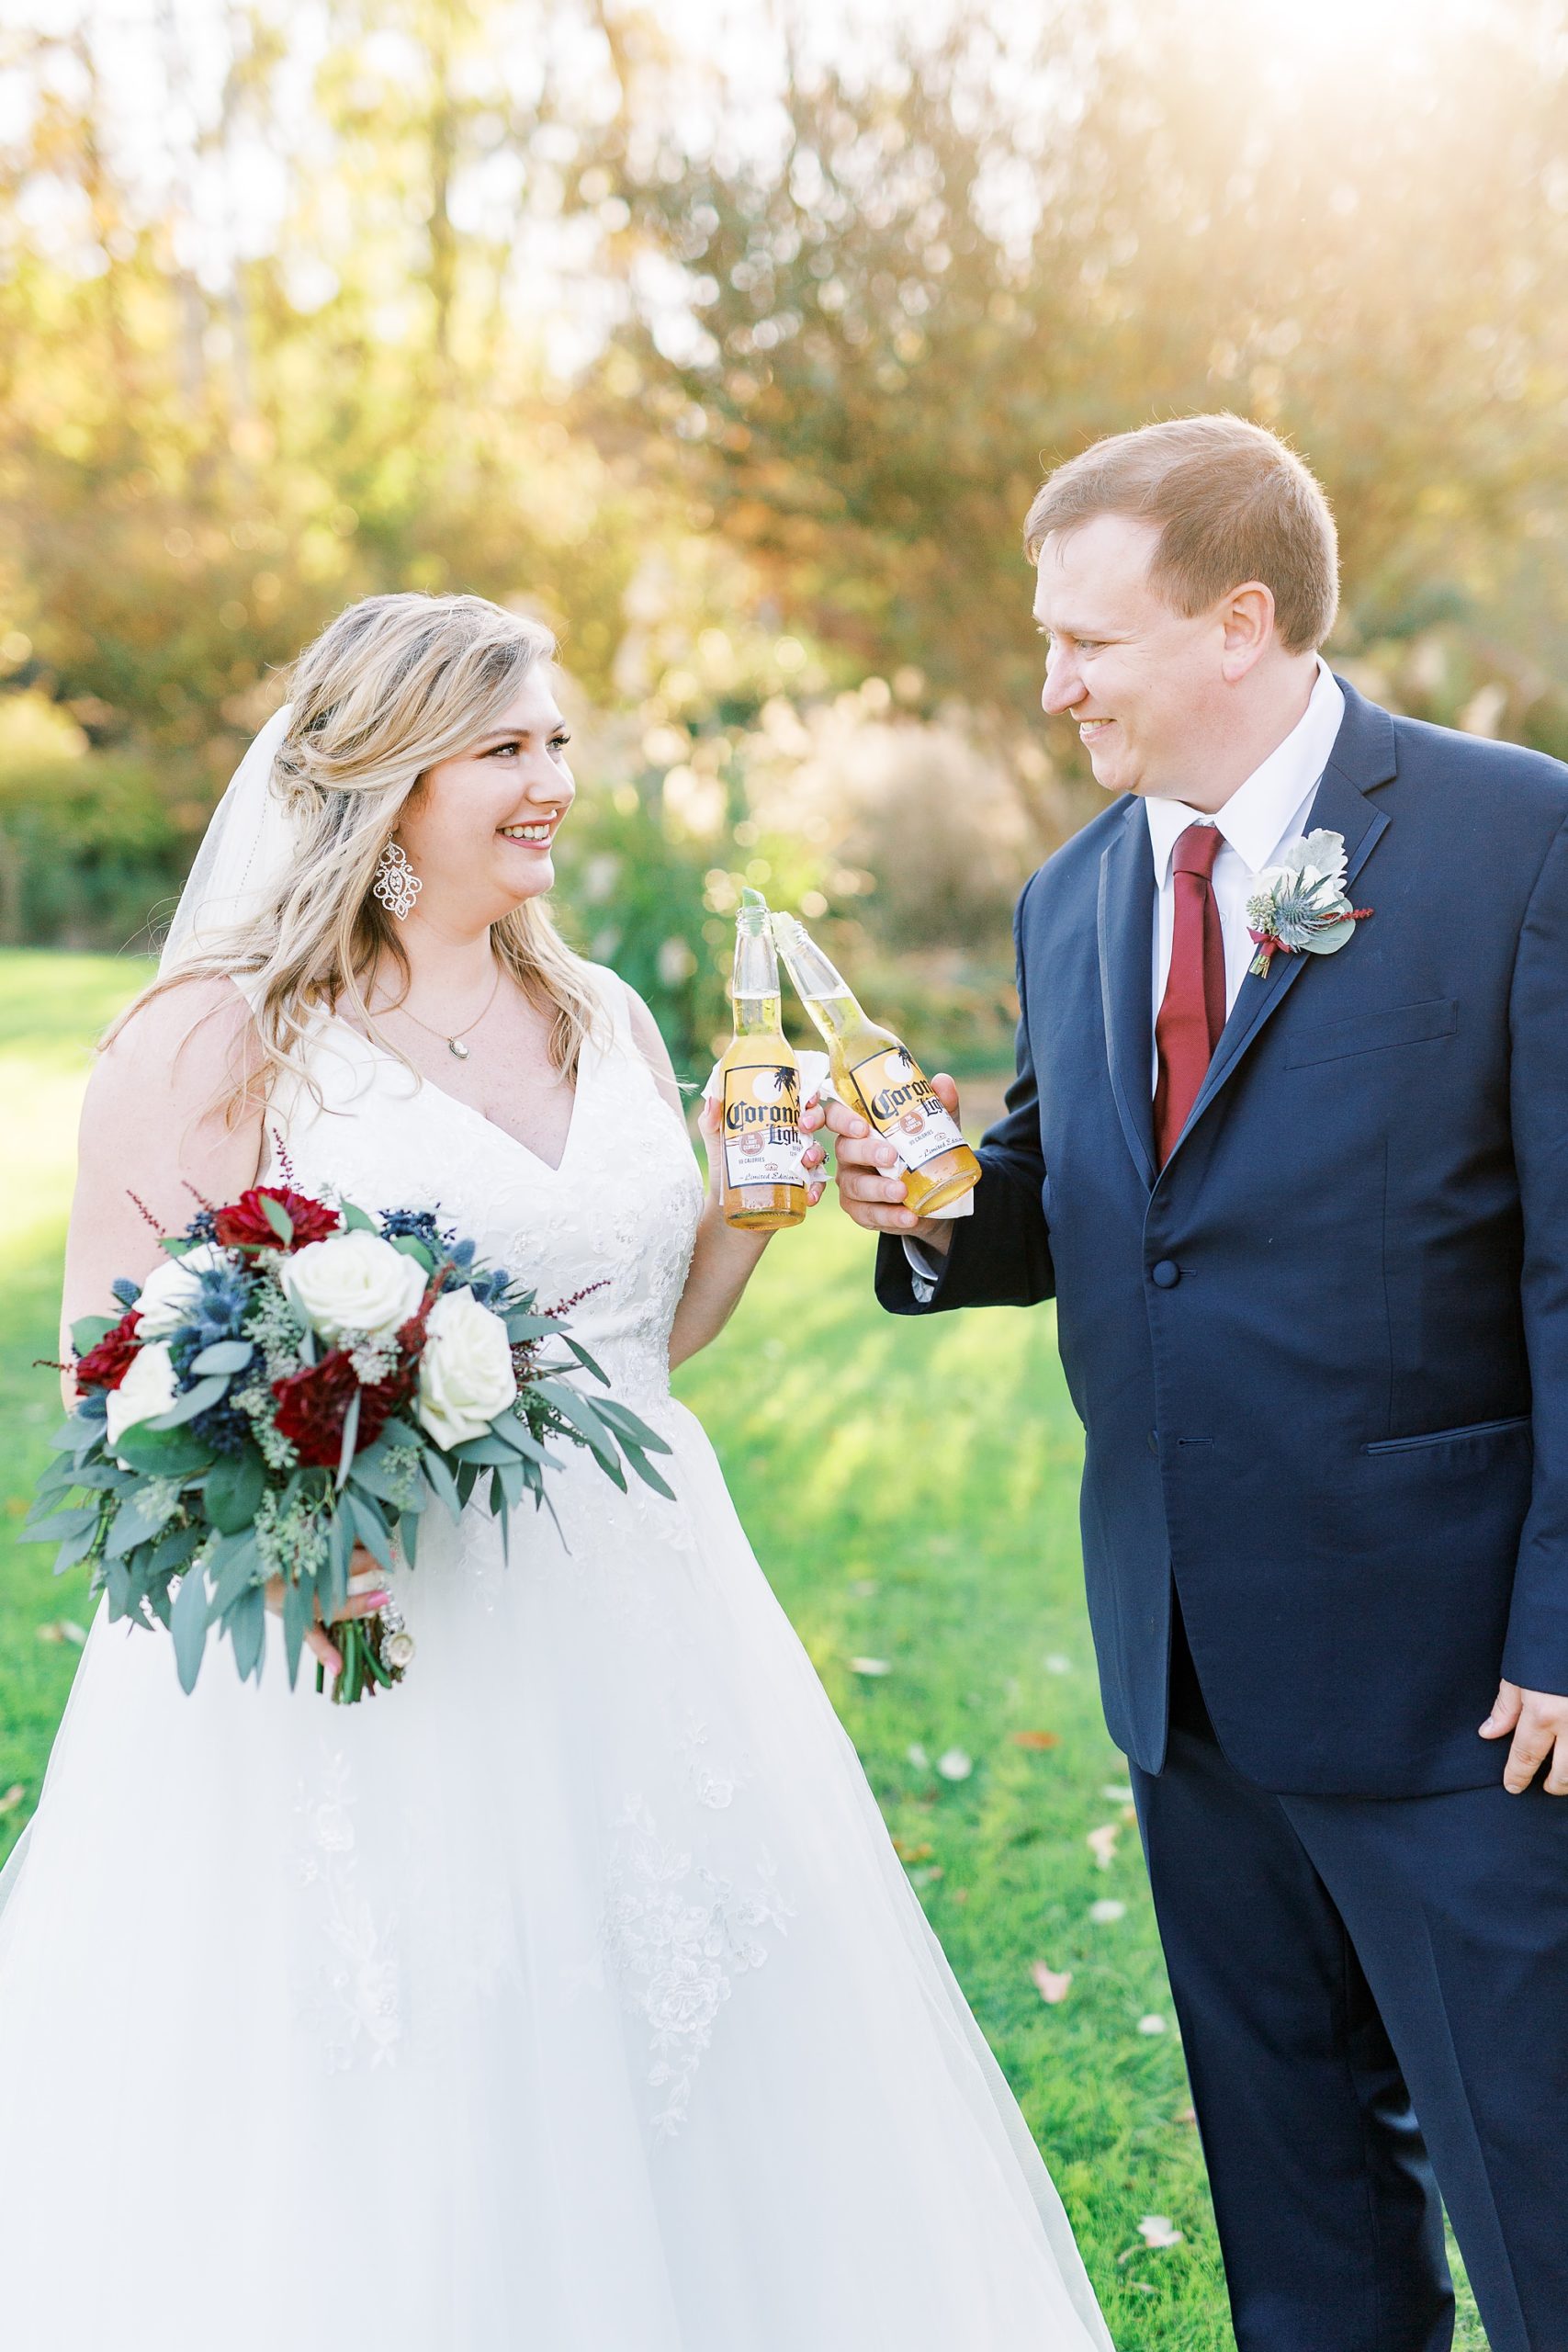 Romantic fall wedding at The Arbors in 2020